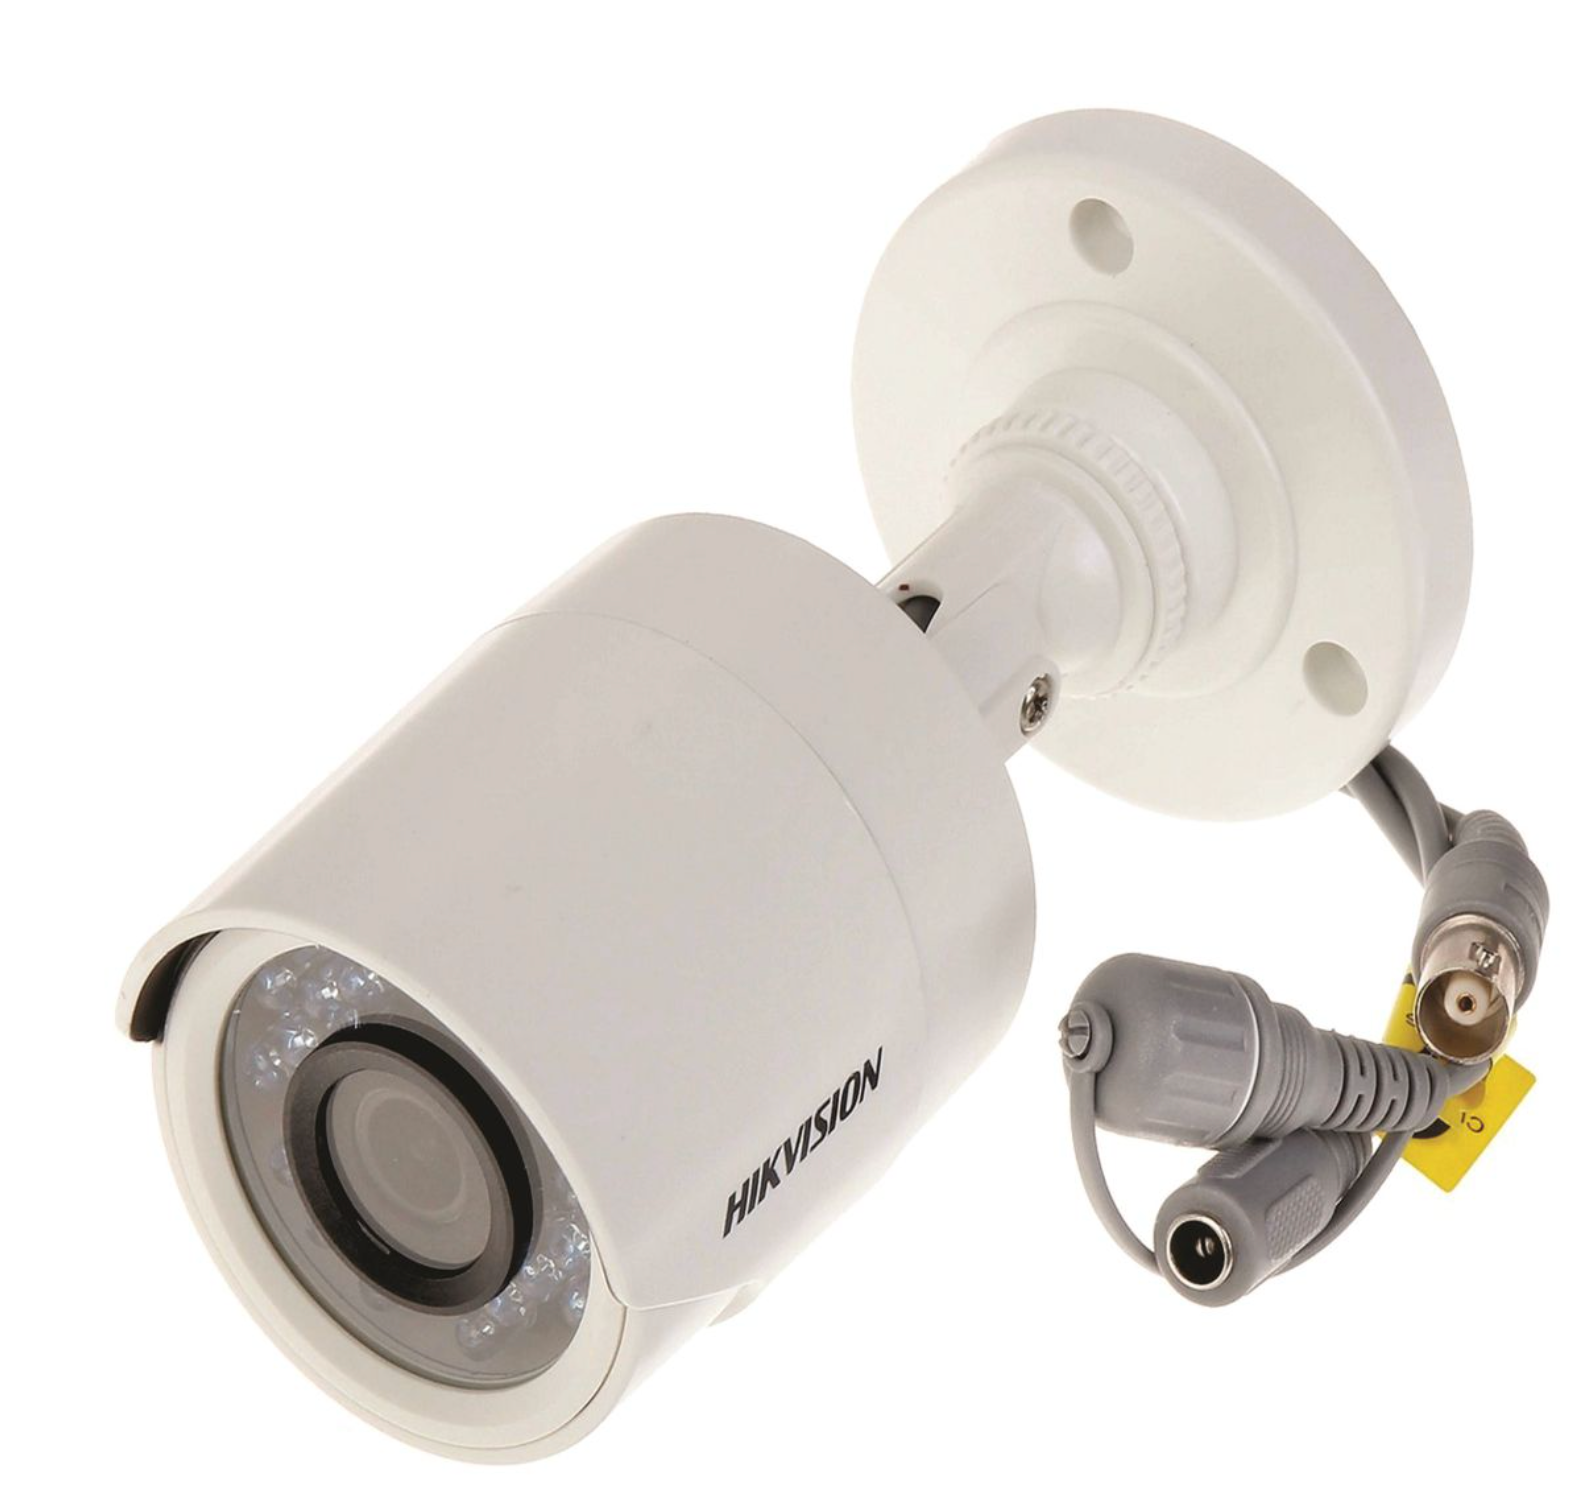 Hikvision THD 720P Outdoor Bullet Camera 20M IR 3.6mm Lens_1